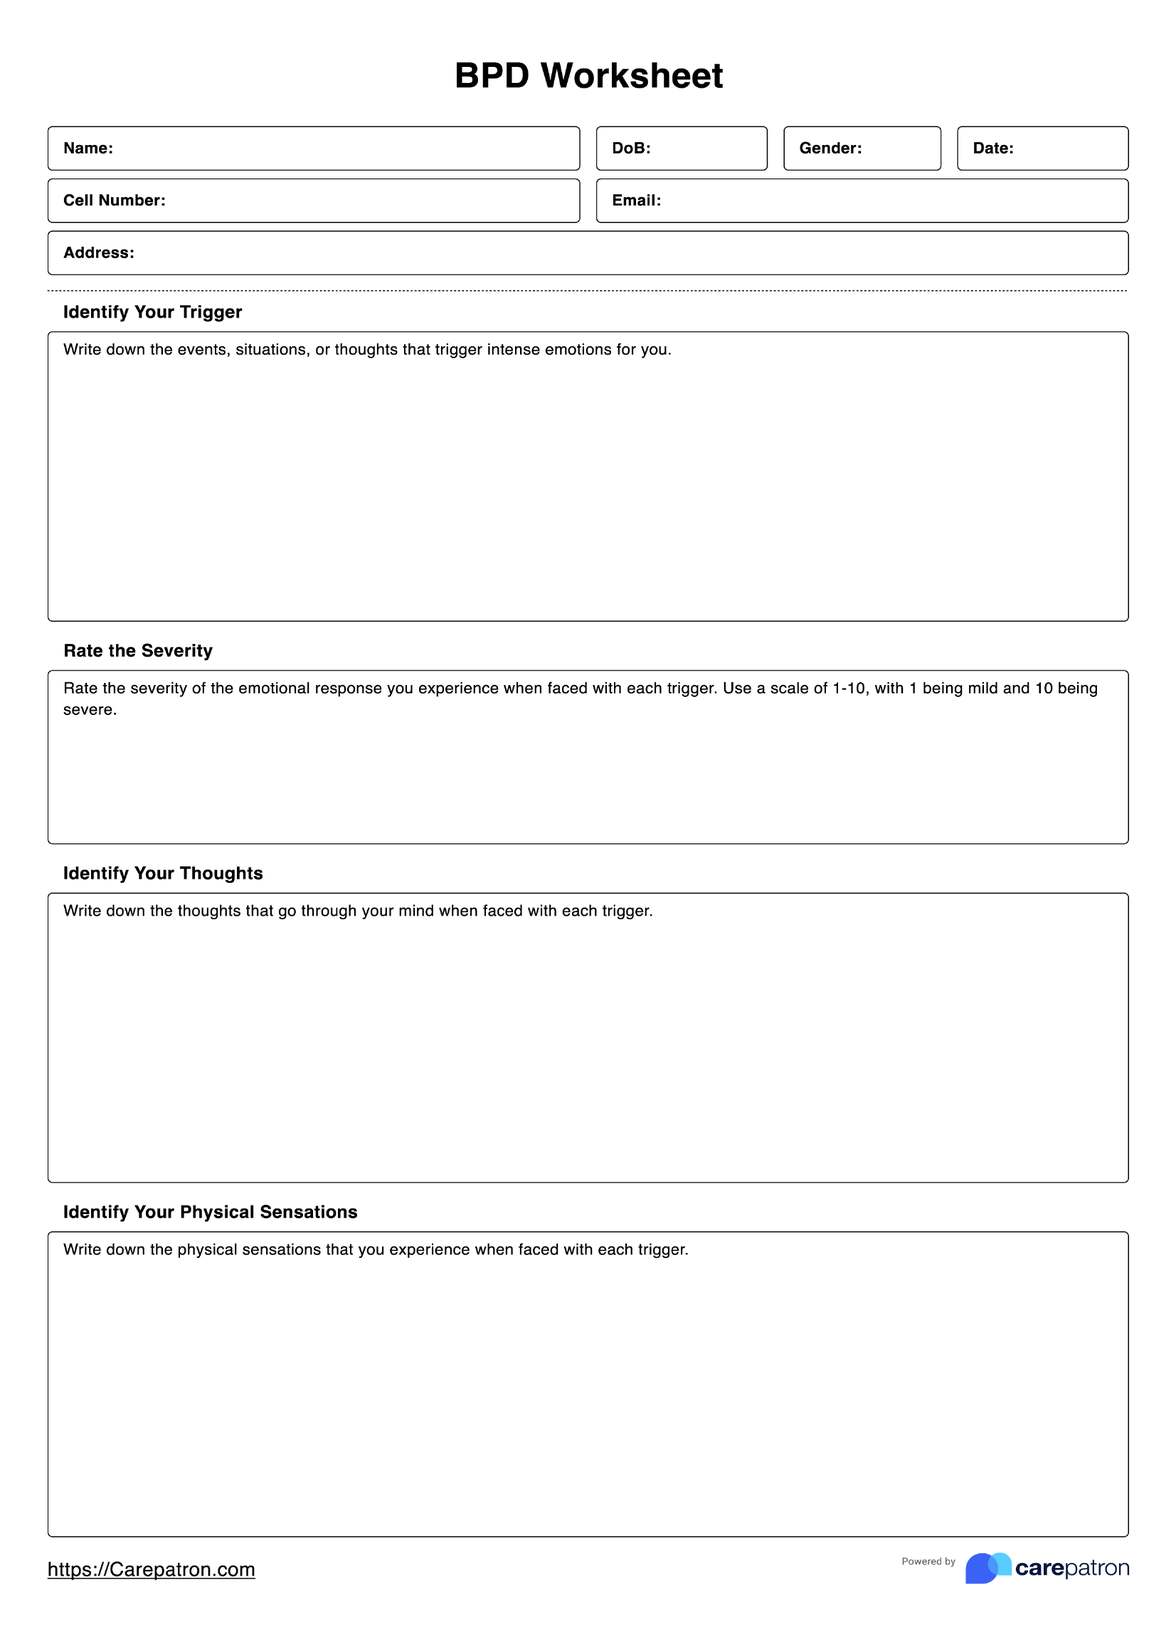 BPD Worksheets PDF Example